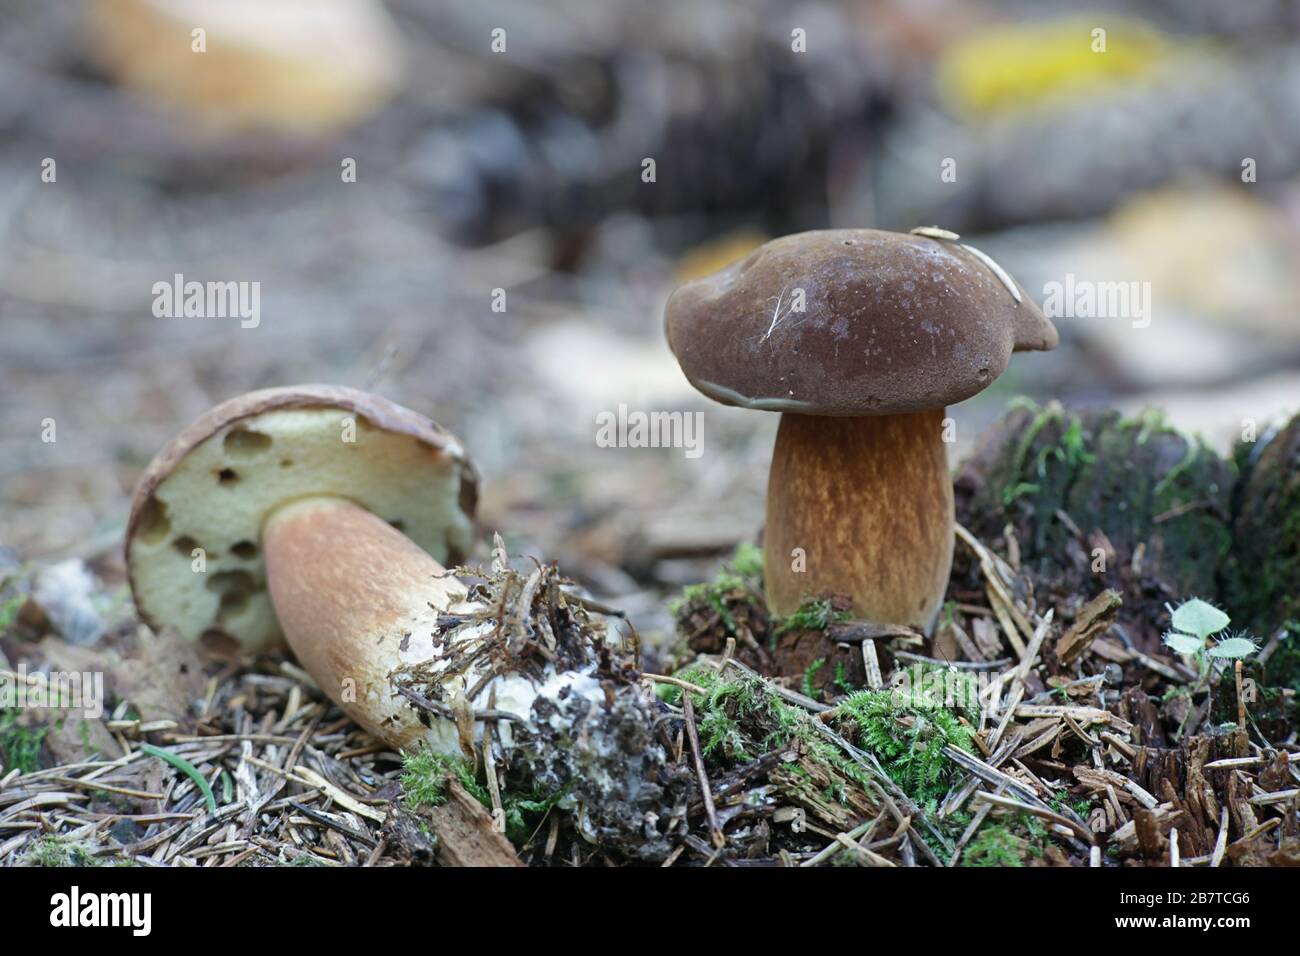 Xerocomus subtomentosus, commonly known as suede bolete, brown and yellow bolet, boring brown bolete or yellow-cracked bolete, wild mushroom from Finl Stock Photo